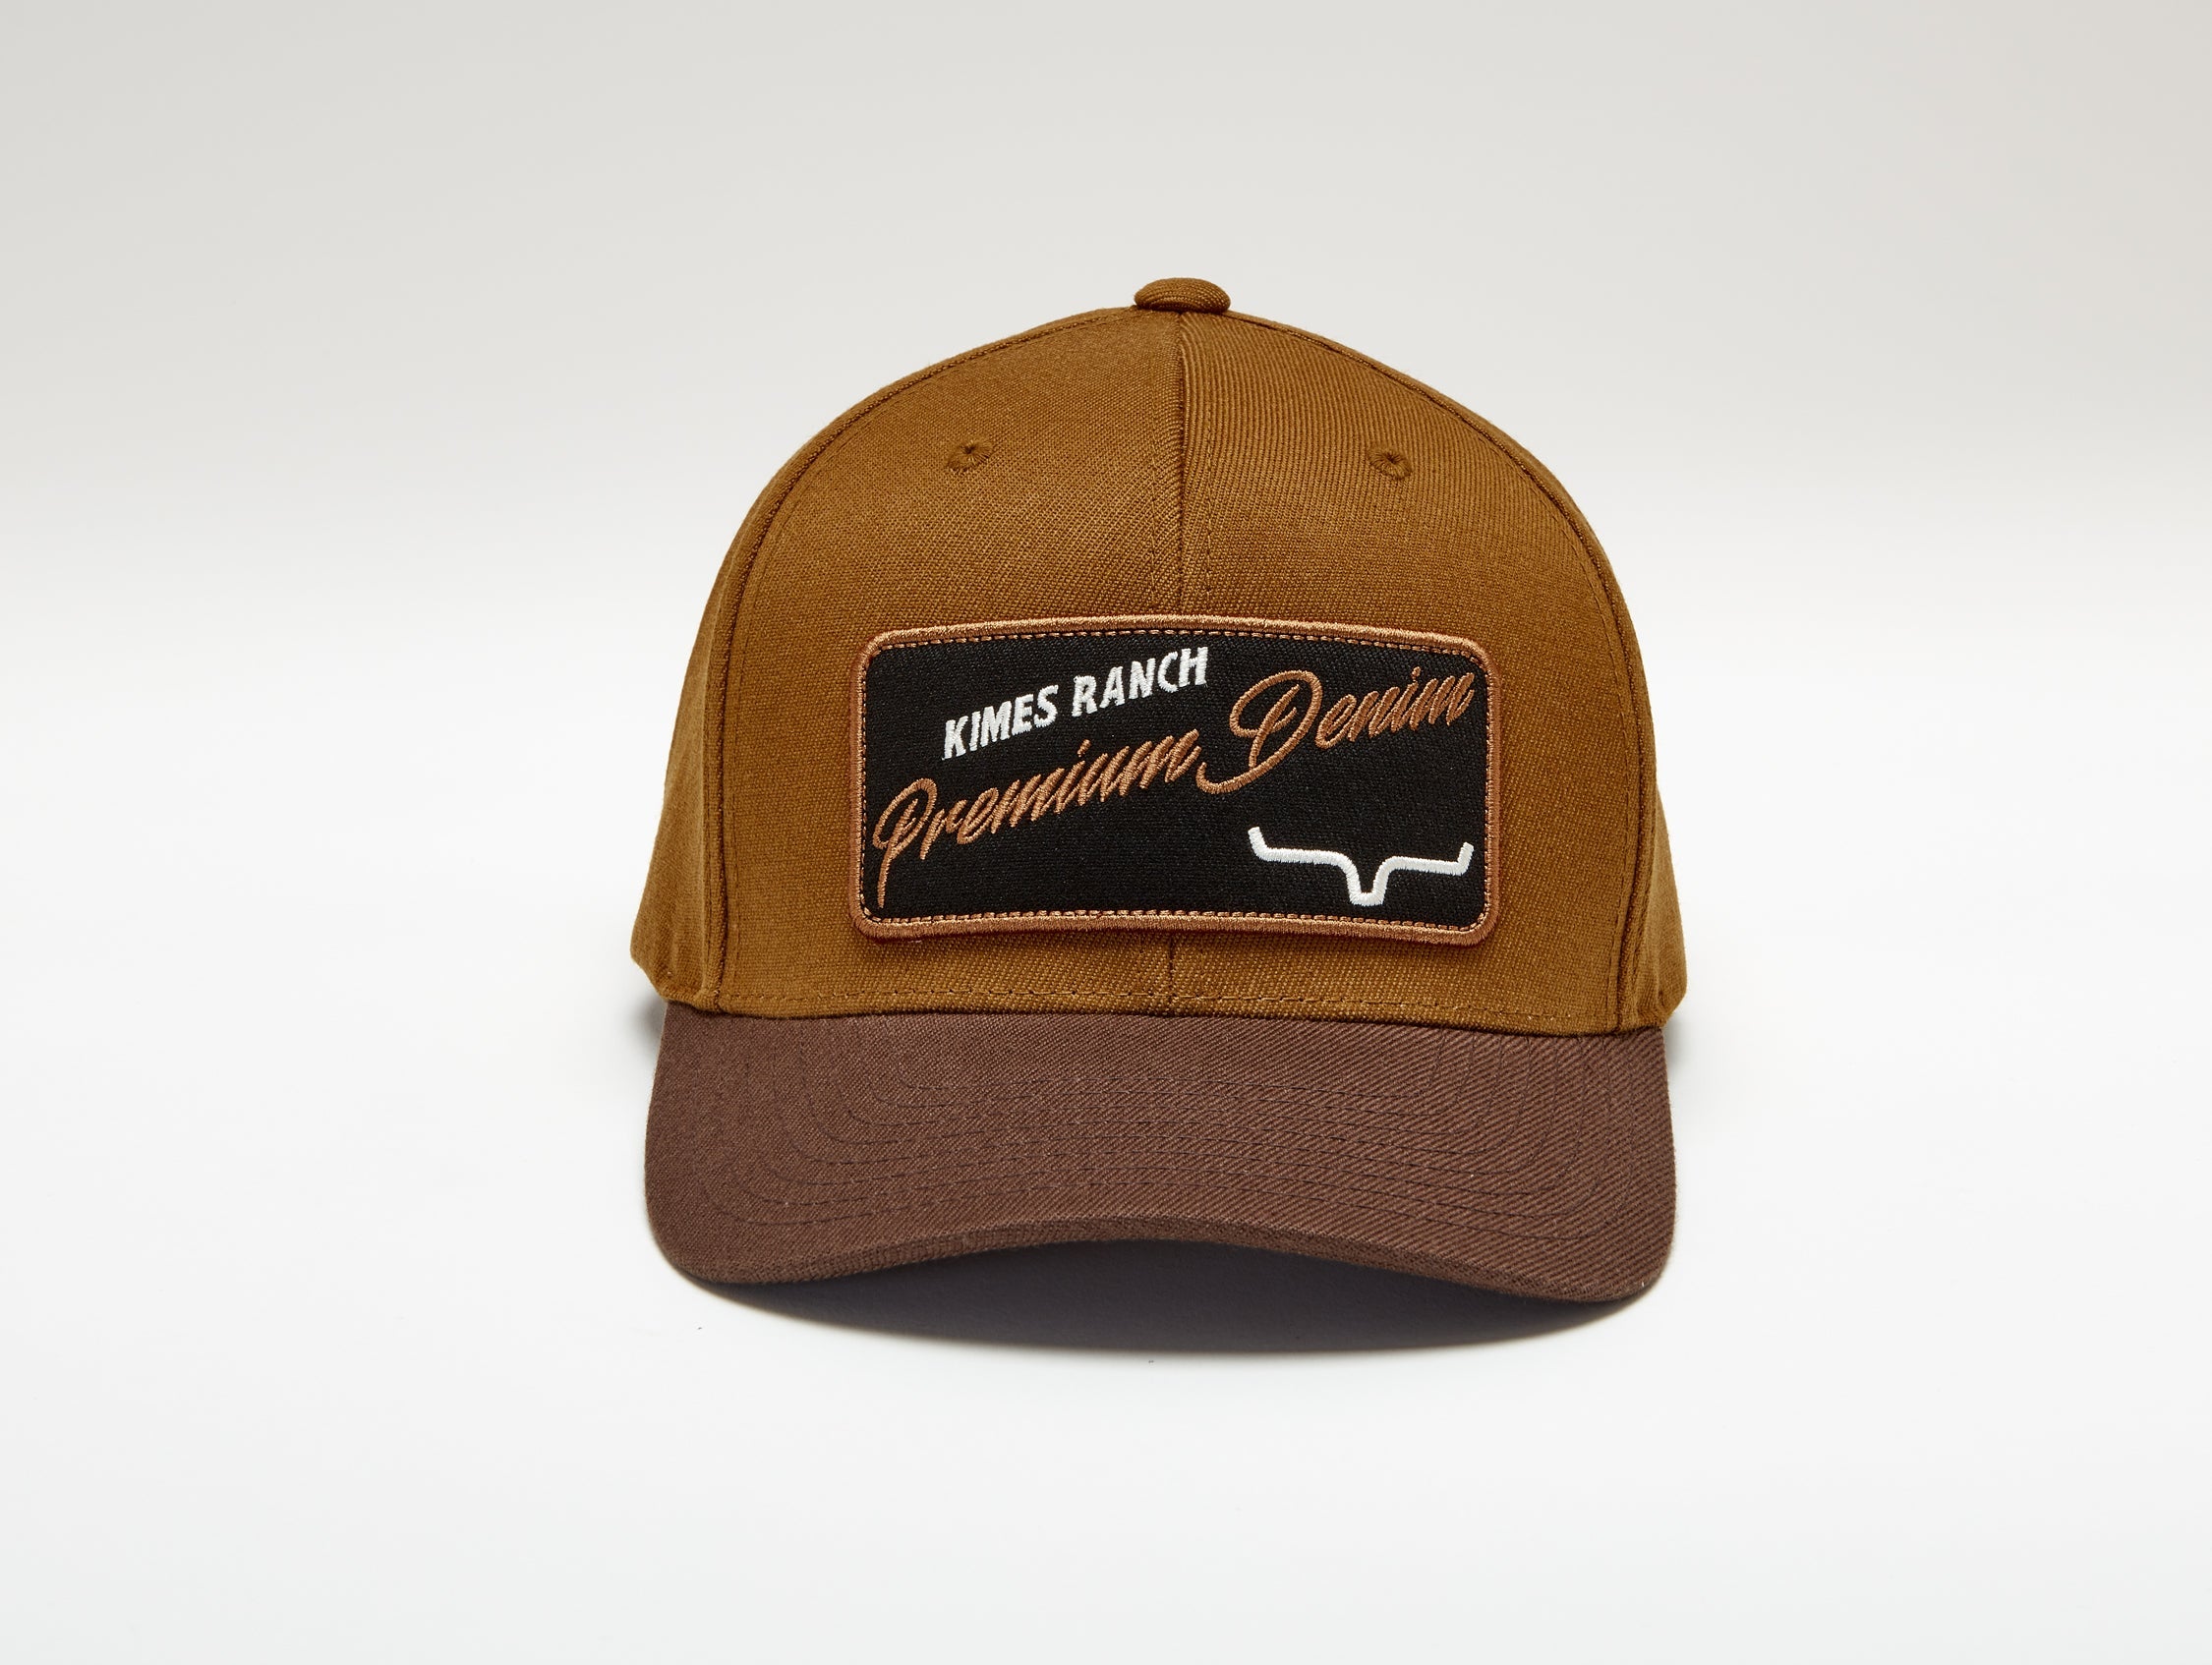 Kimes Ranch Premium Denim Hat